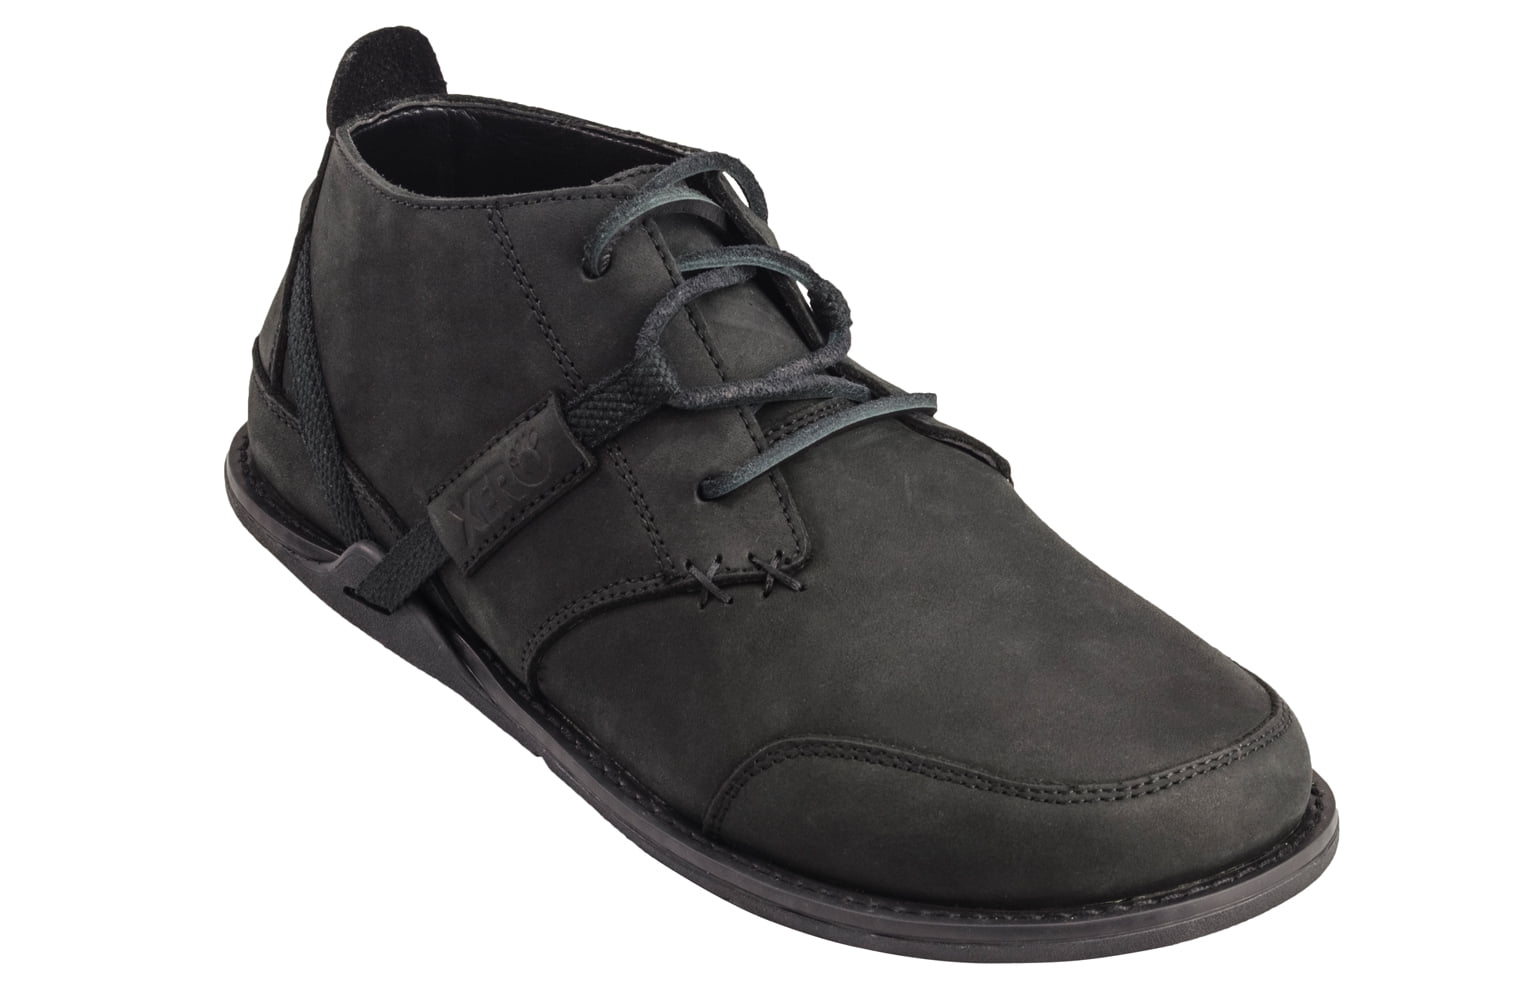 Xero Shoes Coalton - Men's Chukka Style, Barefoot-Inspired Minimalist,  Zero-Drop Low Leather Boot - Mesquite 